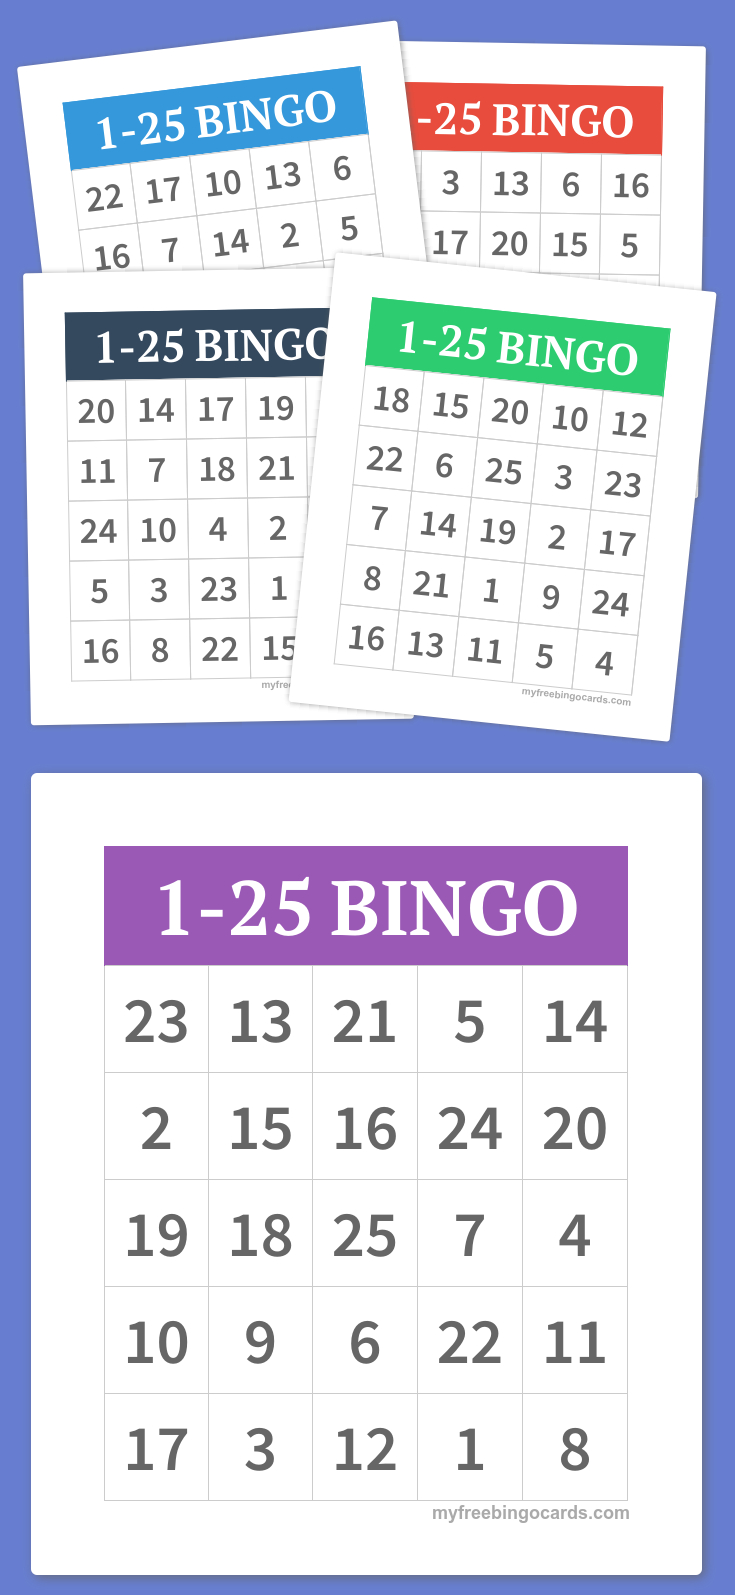 Free Printable Spanish Bingo Cards Free Printable